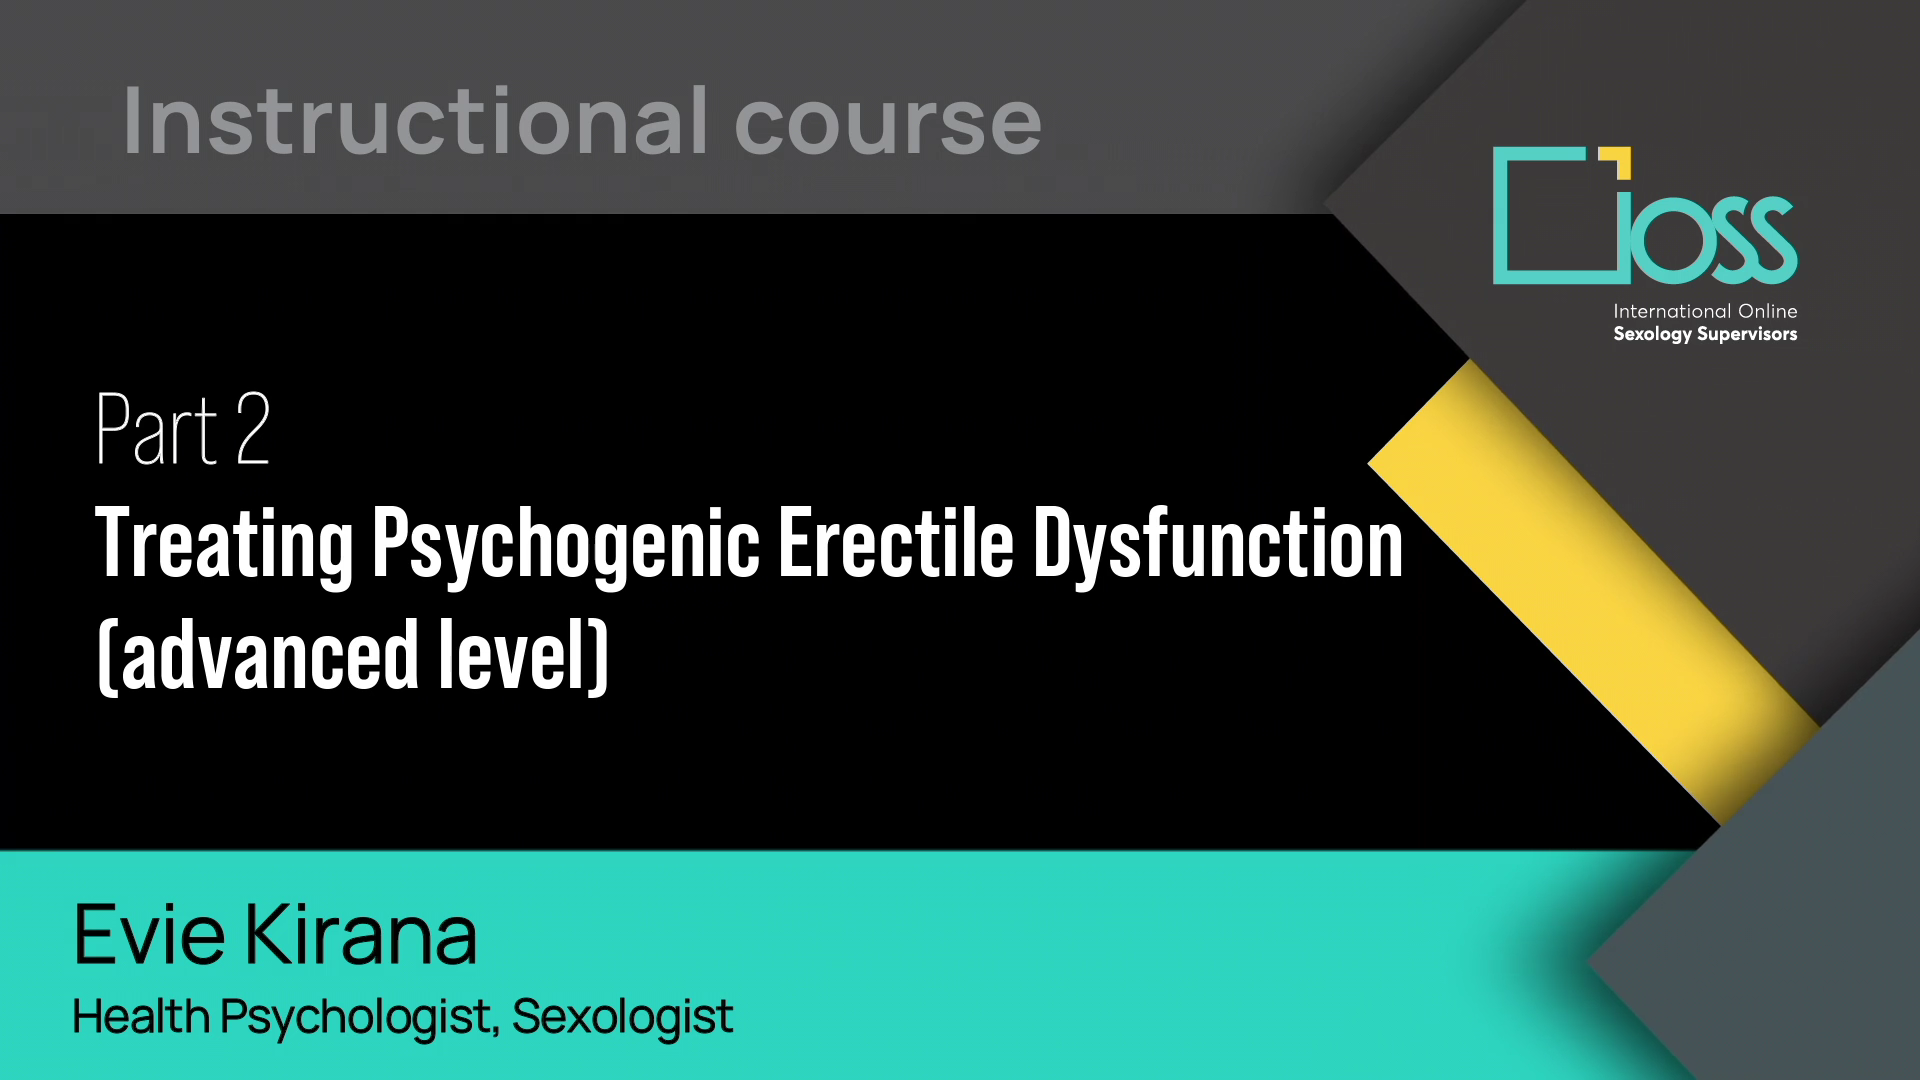 Part 2 Treating Psychogenic Erectile Dysfunction advanced (Part 1 & 2)